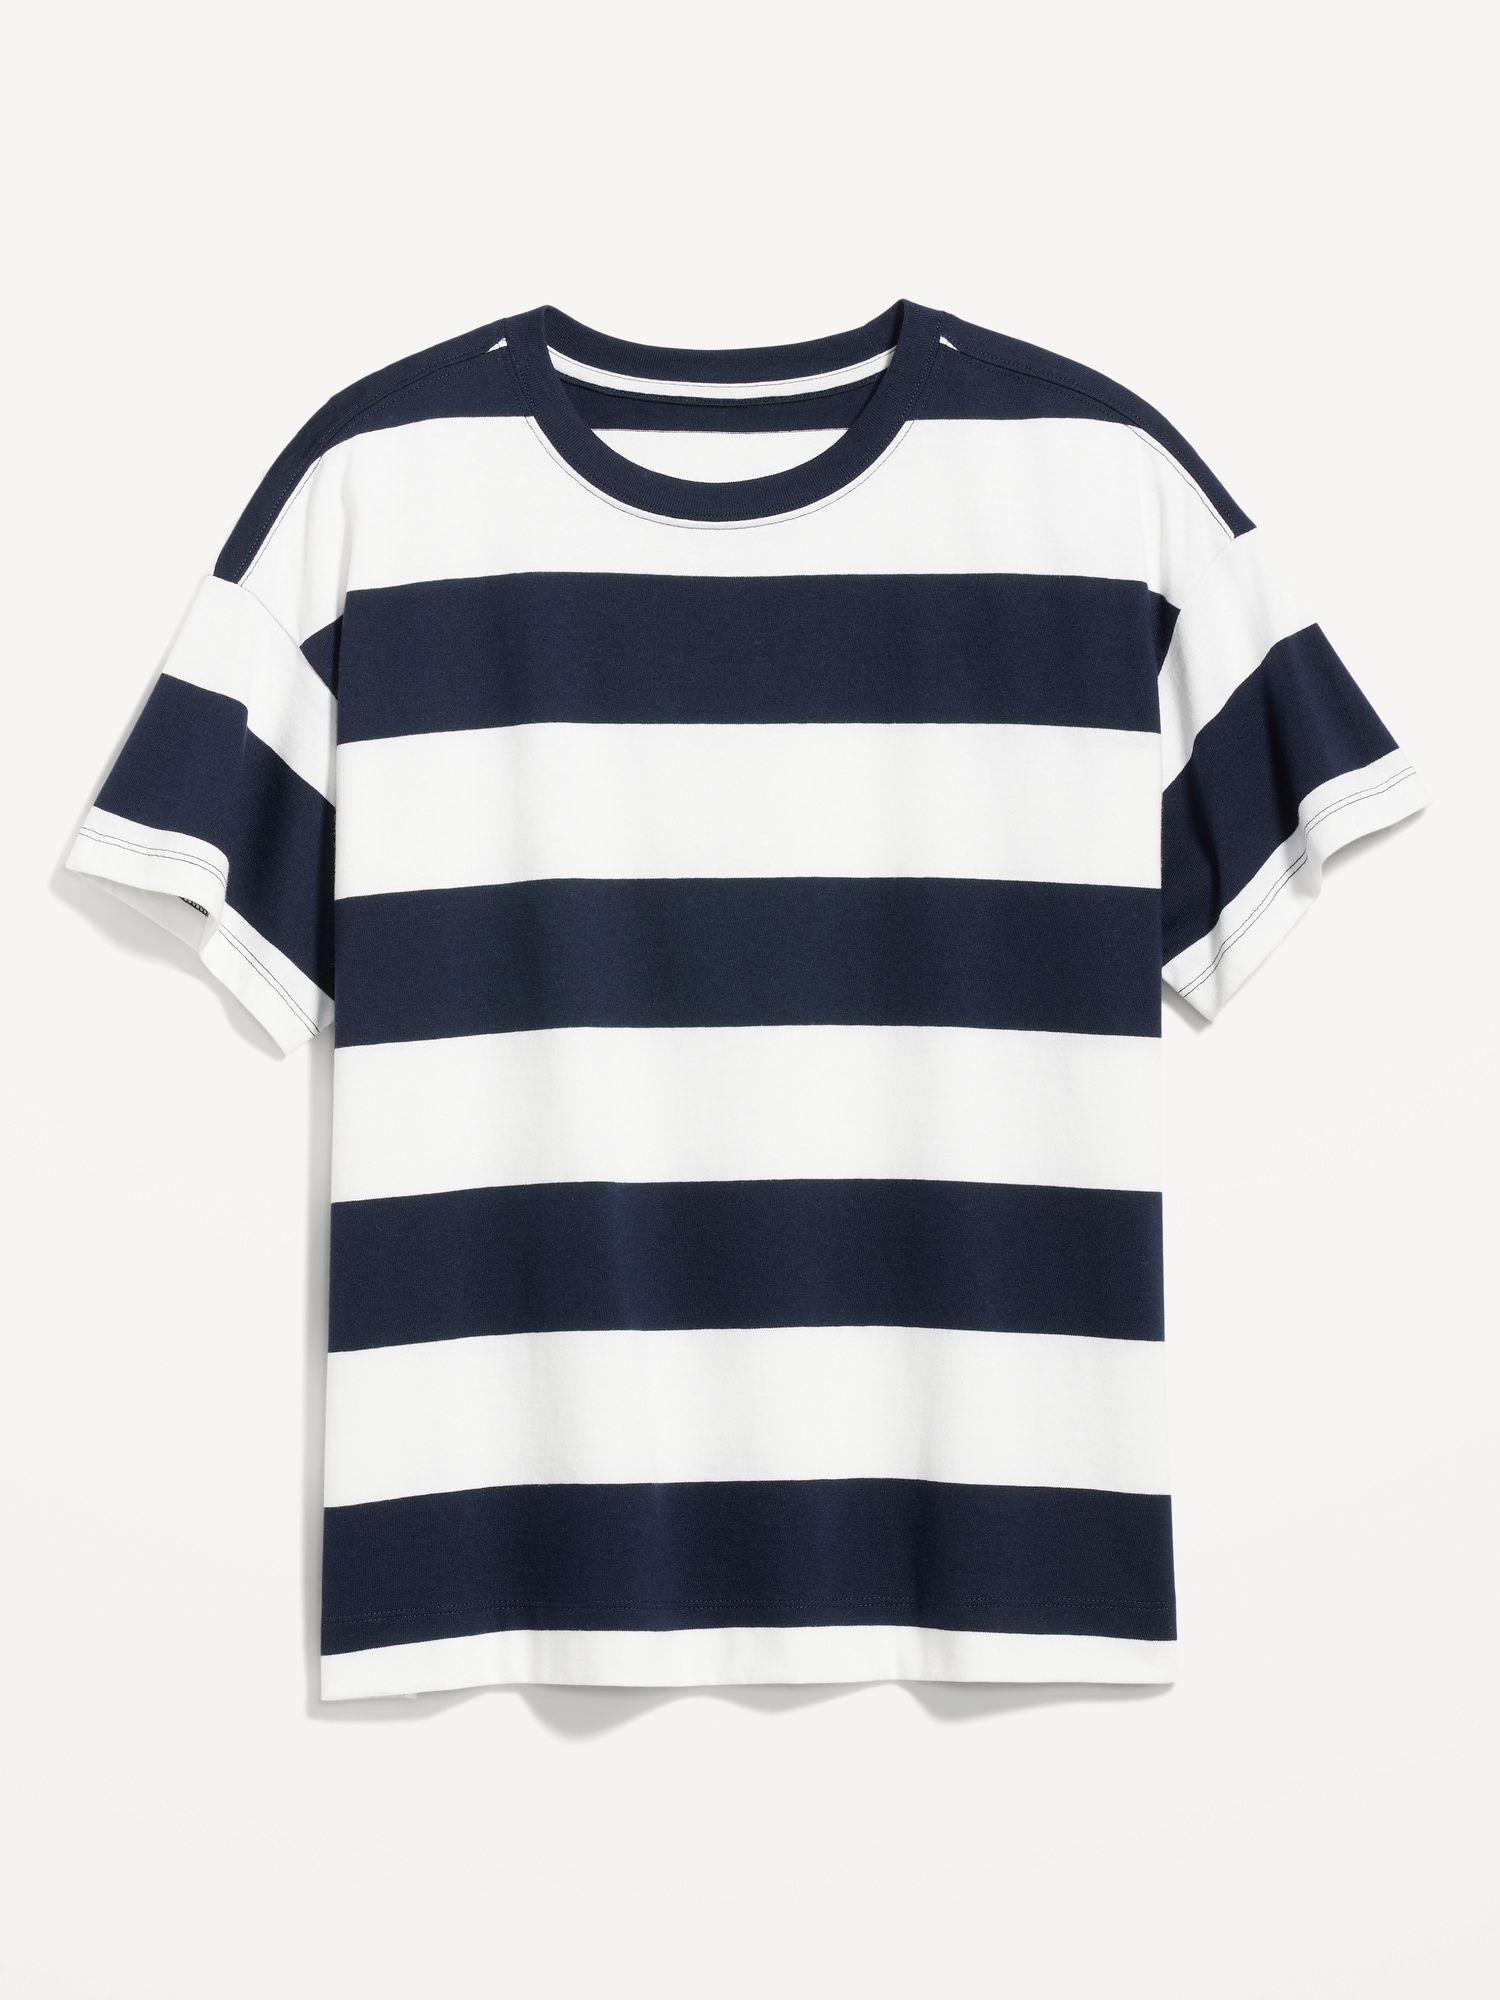 White Striped T-shirt